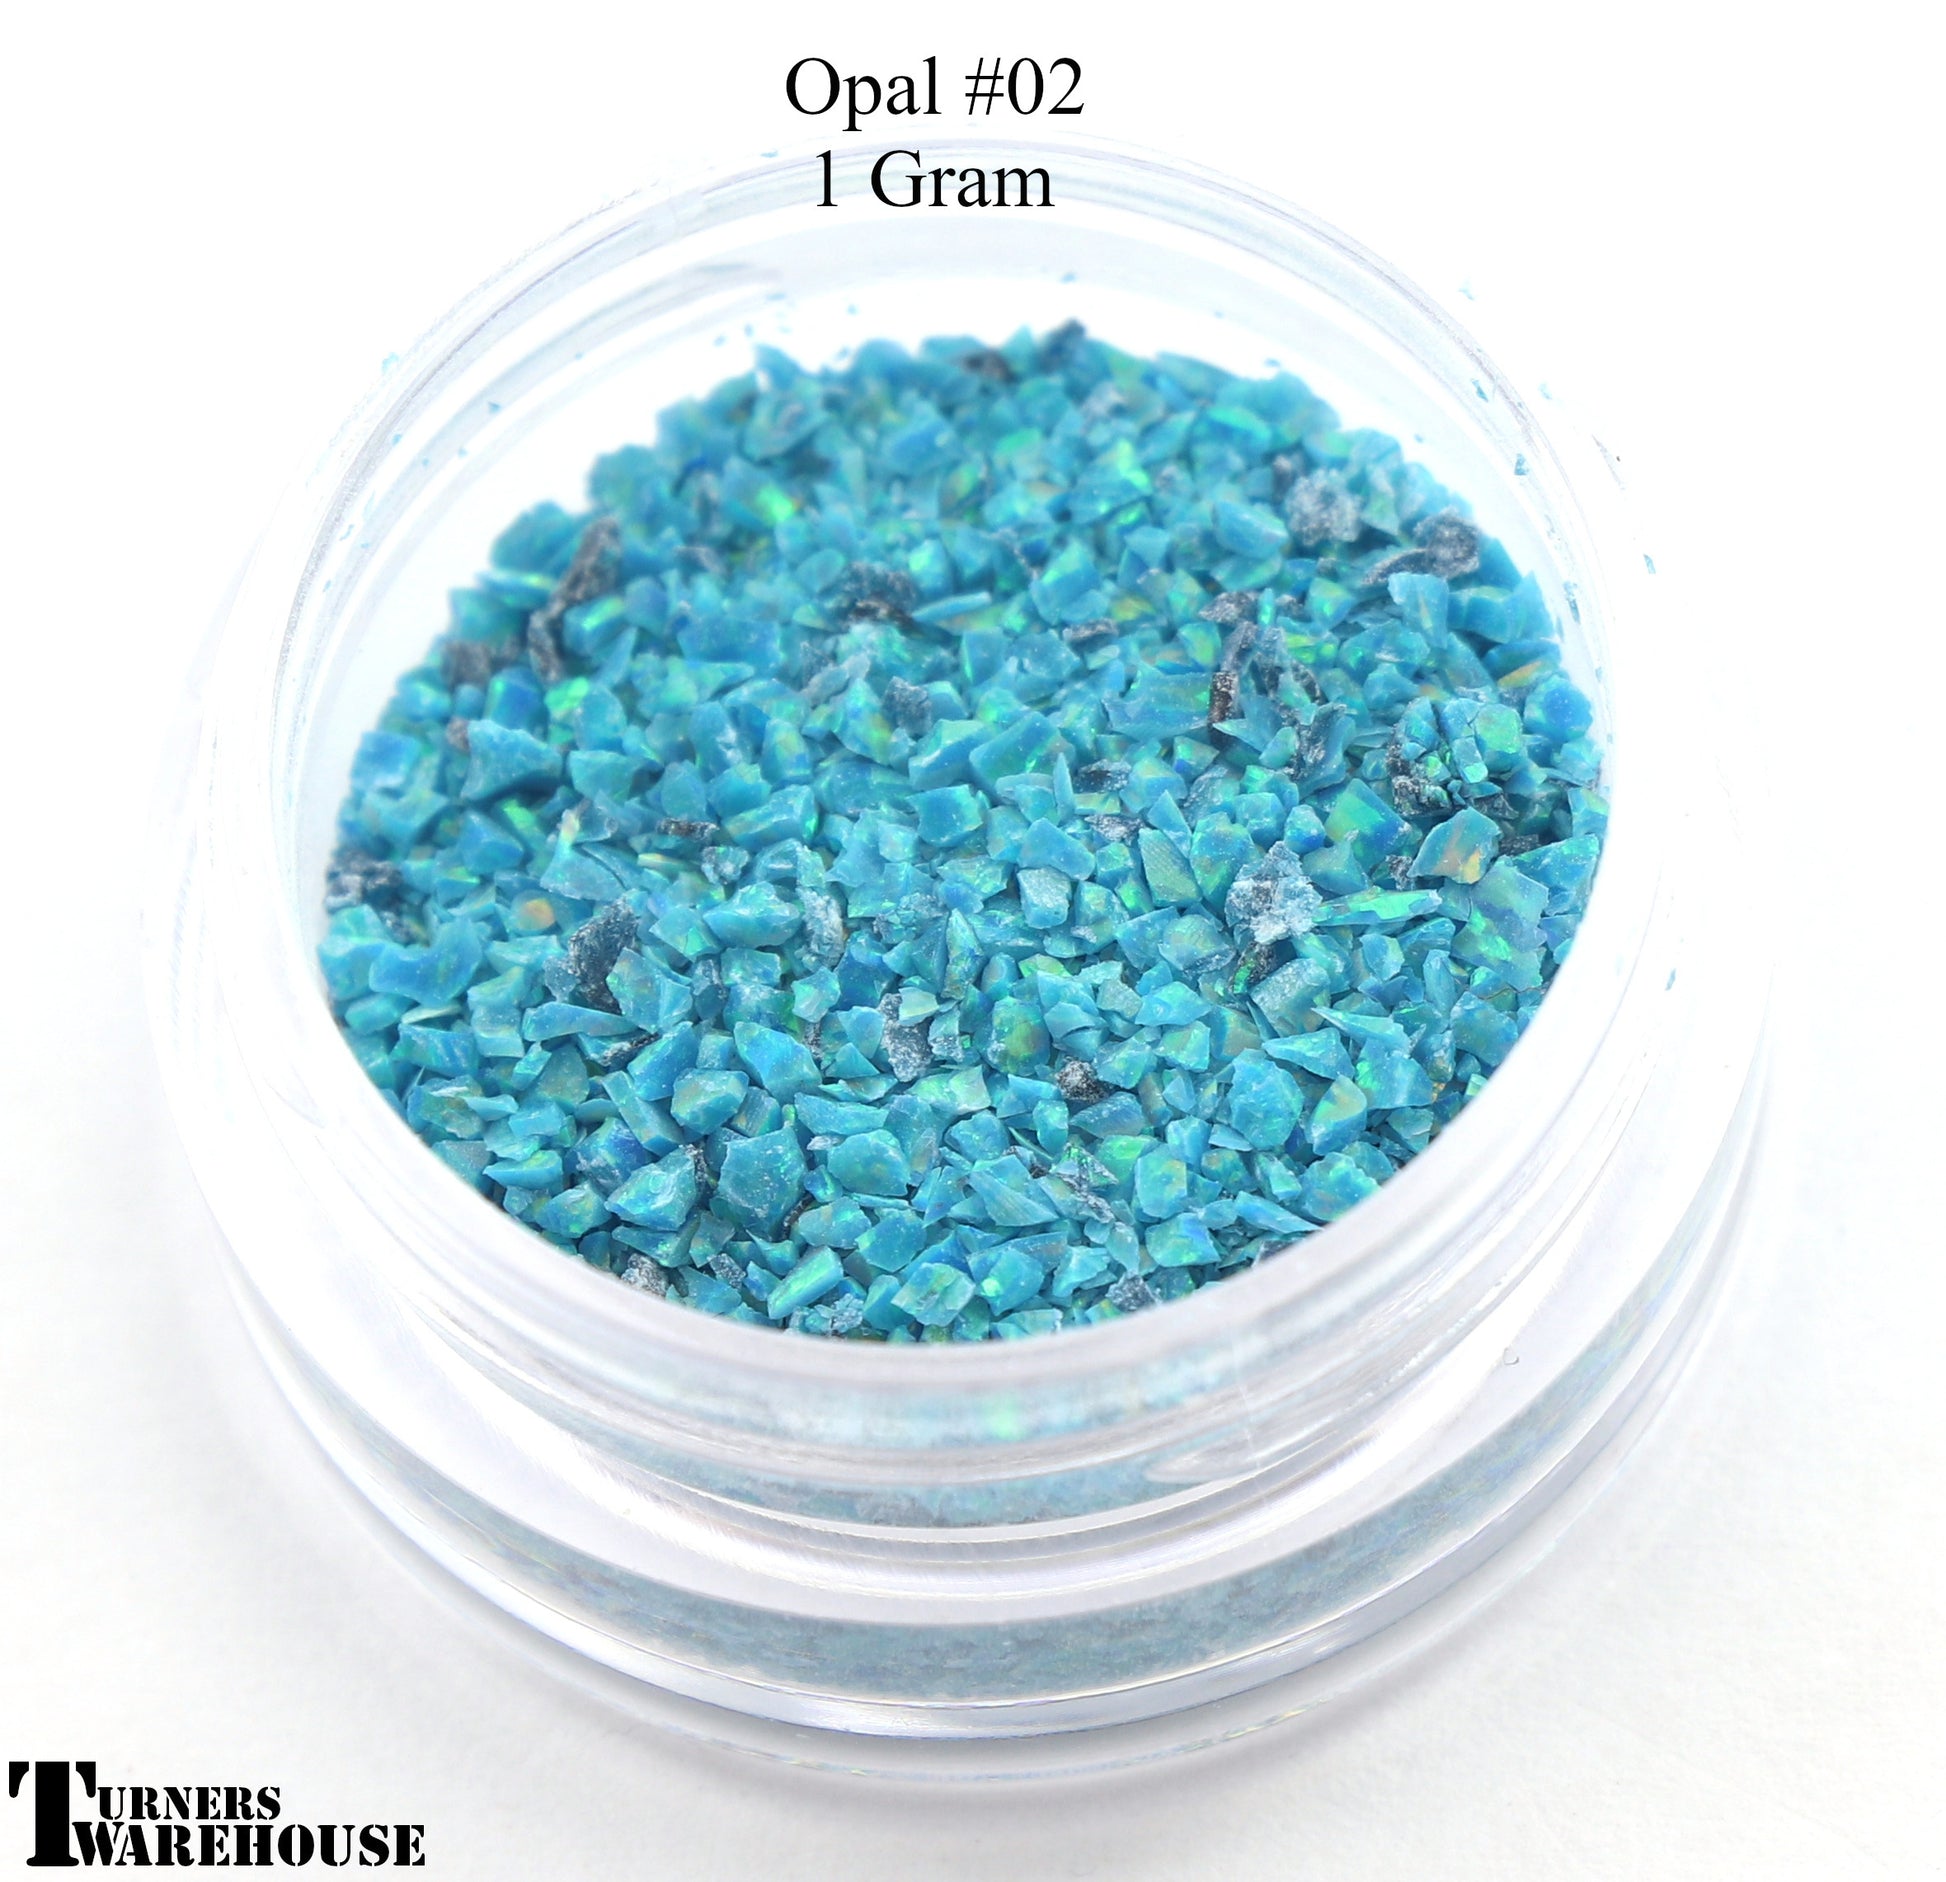 Teal Blue Opal #02 1 Gram